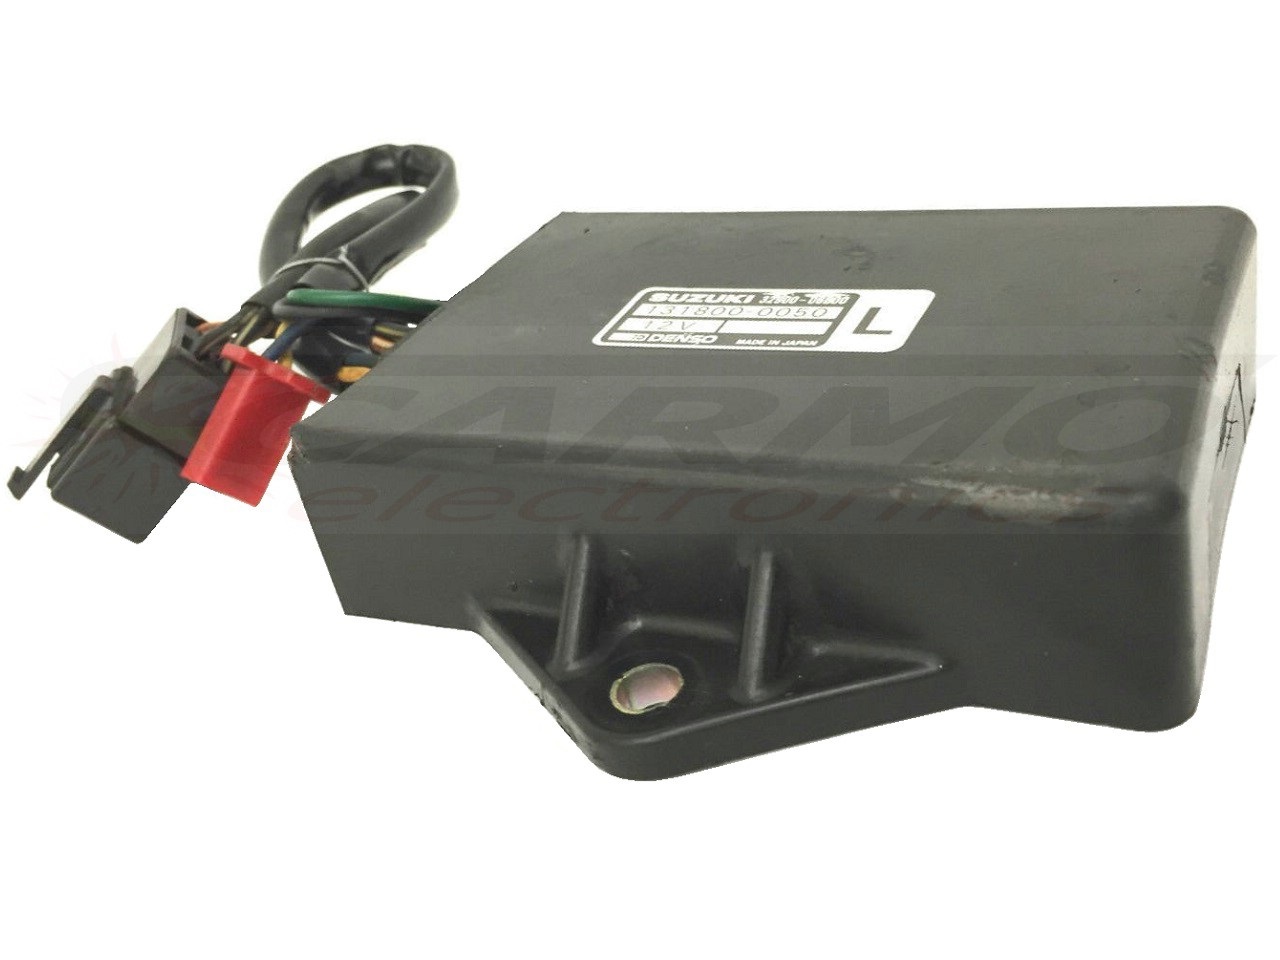 GSXR750 igniter ignition module CDI TCI Box (32900-27A00, 131100-4641)